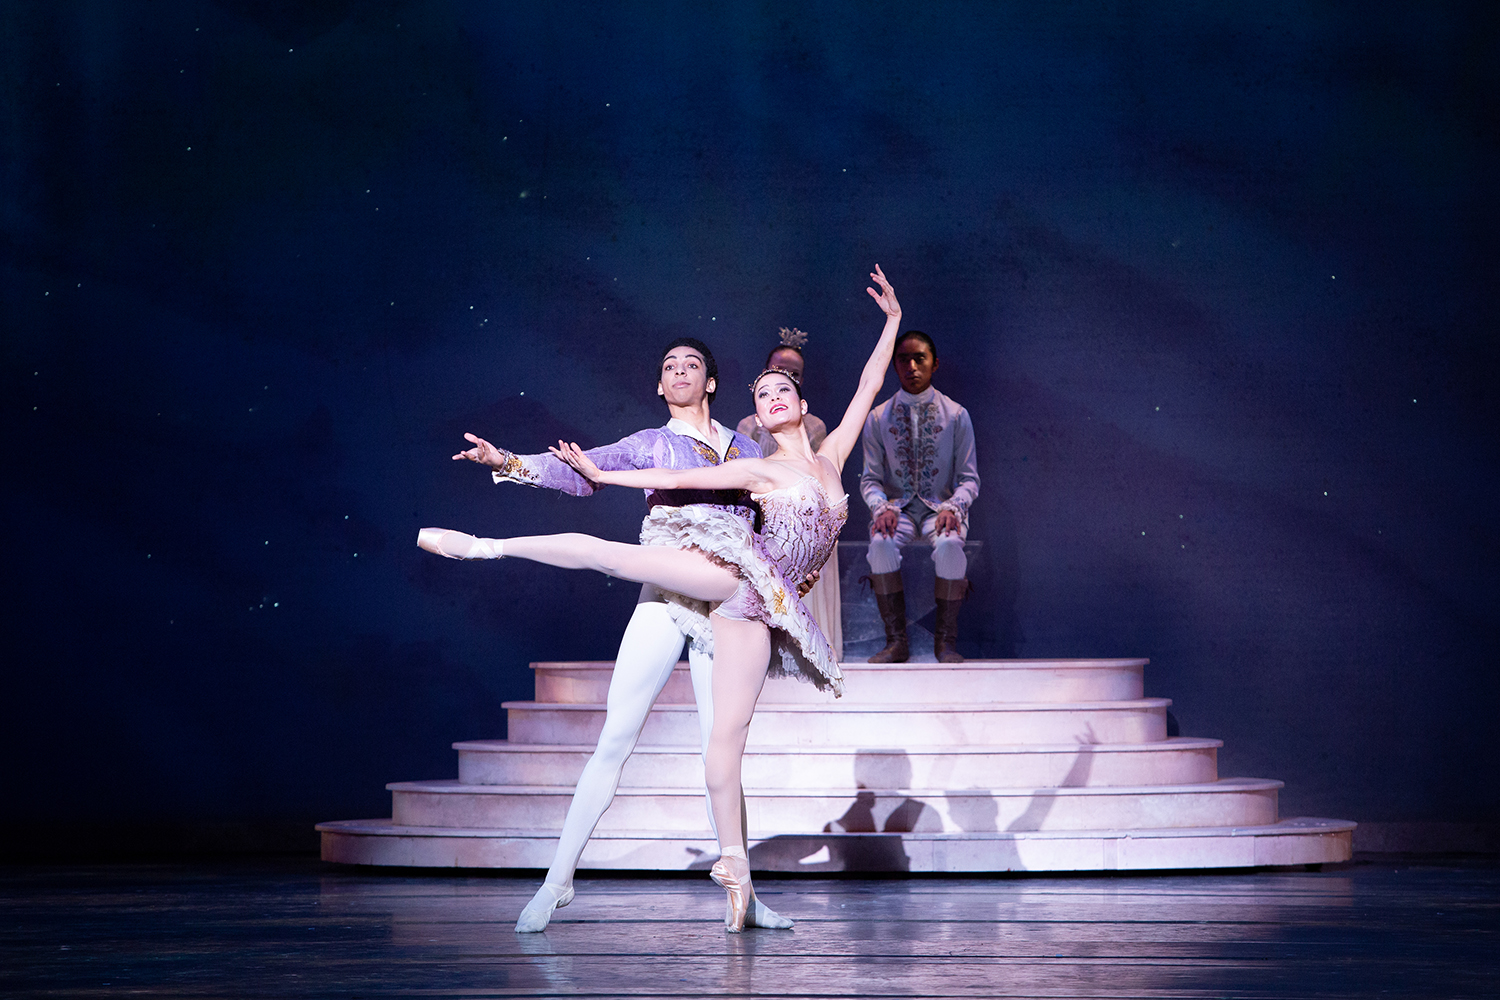 Mimi Tompkins and Ethan Prince as Sugar Plum Fairy & Cavalier in Ballet Arizona's The Nutcracker. Photo by Alexander Iziliaev.